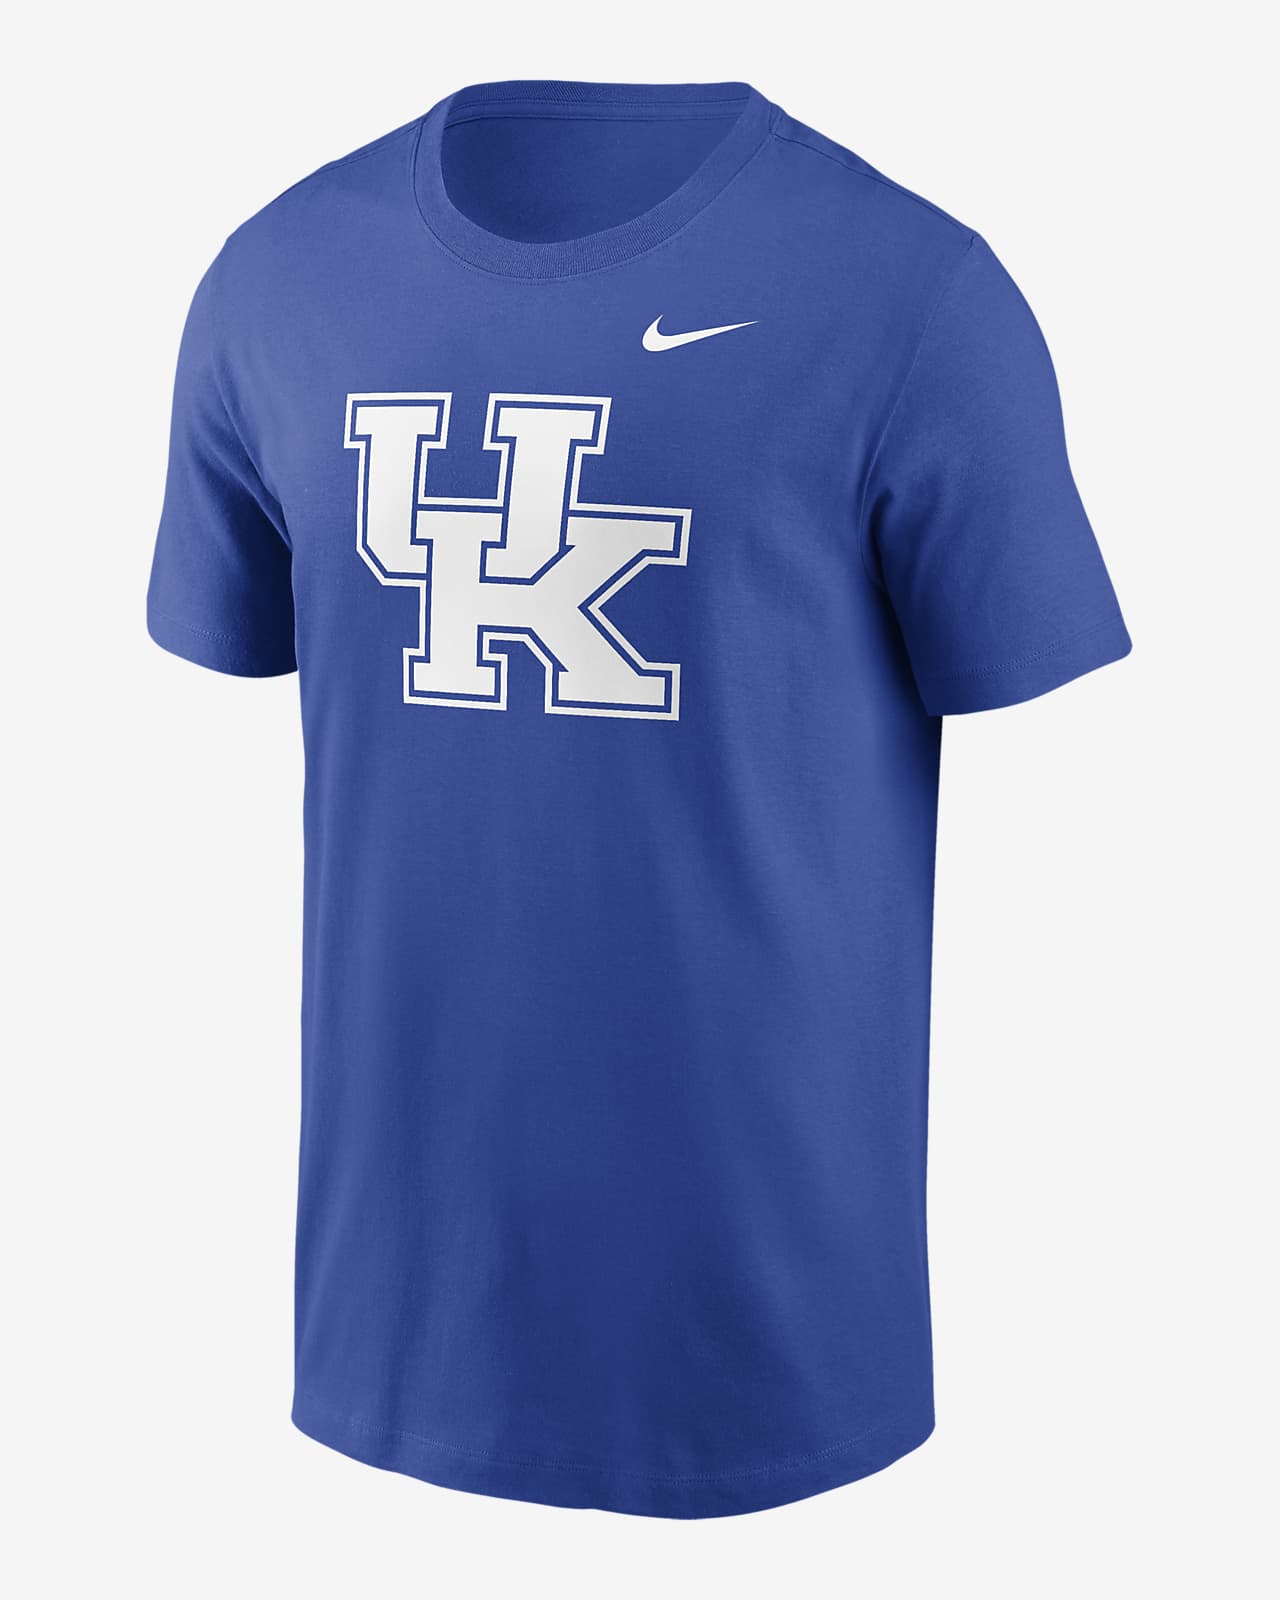 Kentucky Wildcats Primetime Evergreen Logo Men's Nike College T-Shirt